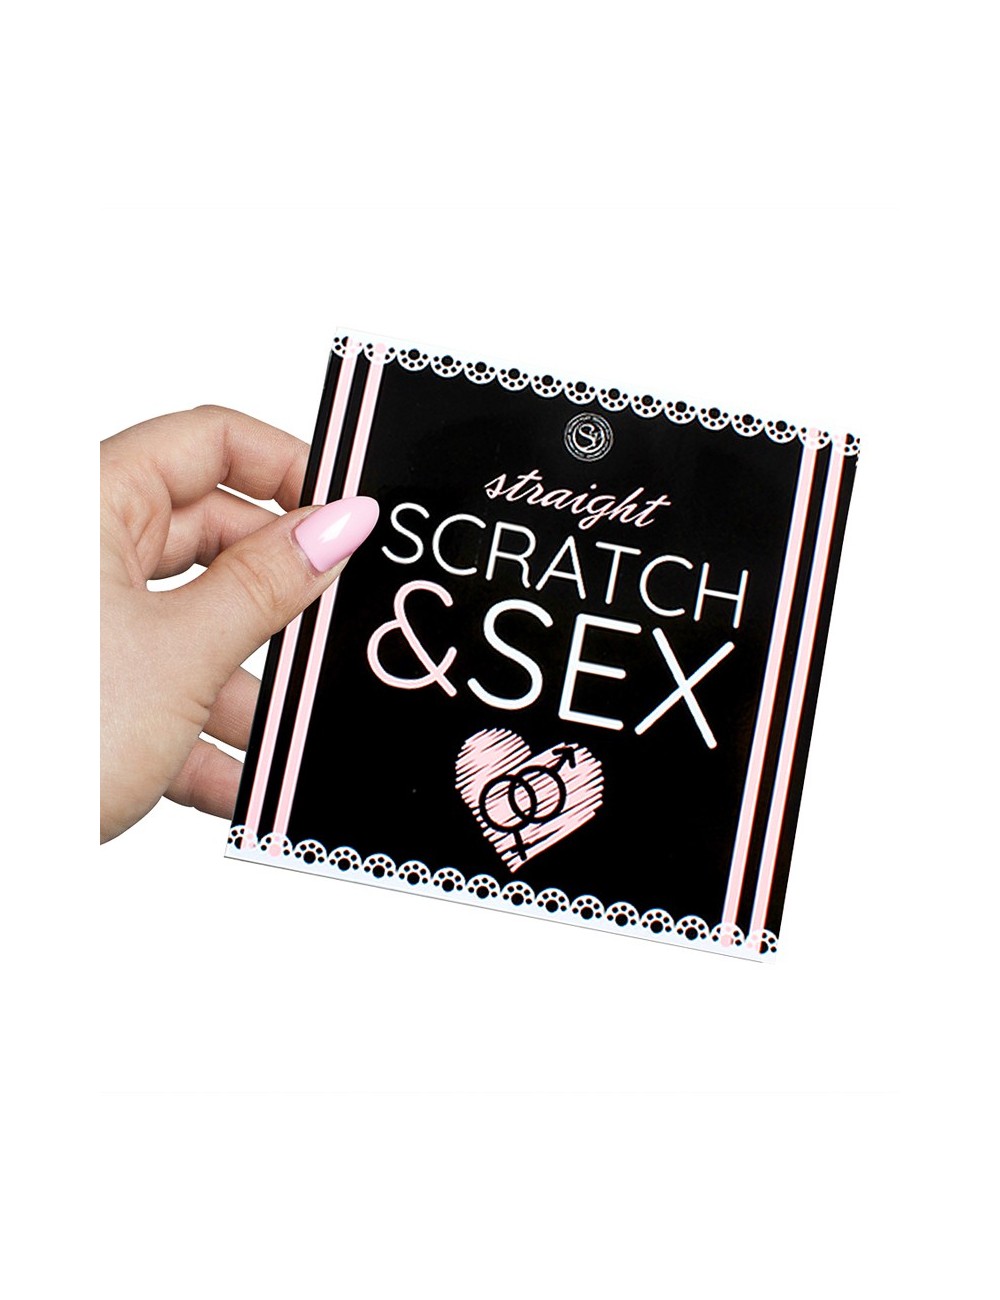 Jeu à gratter Scratch  Sex - Secret Play